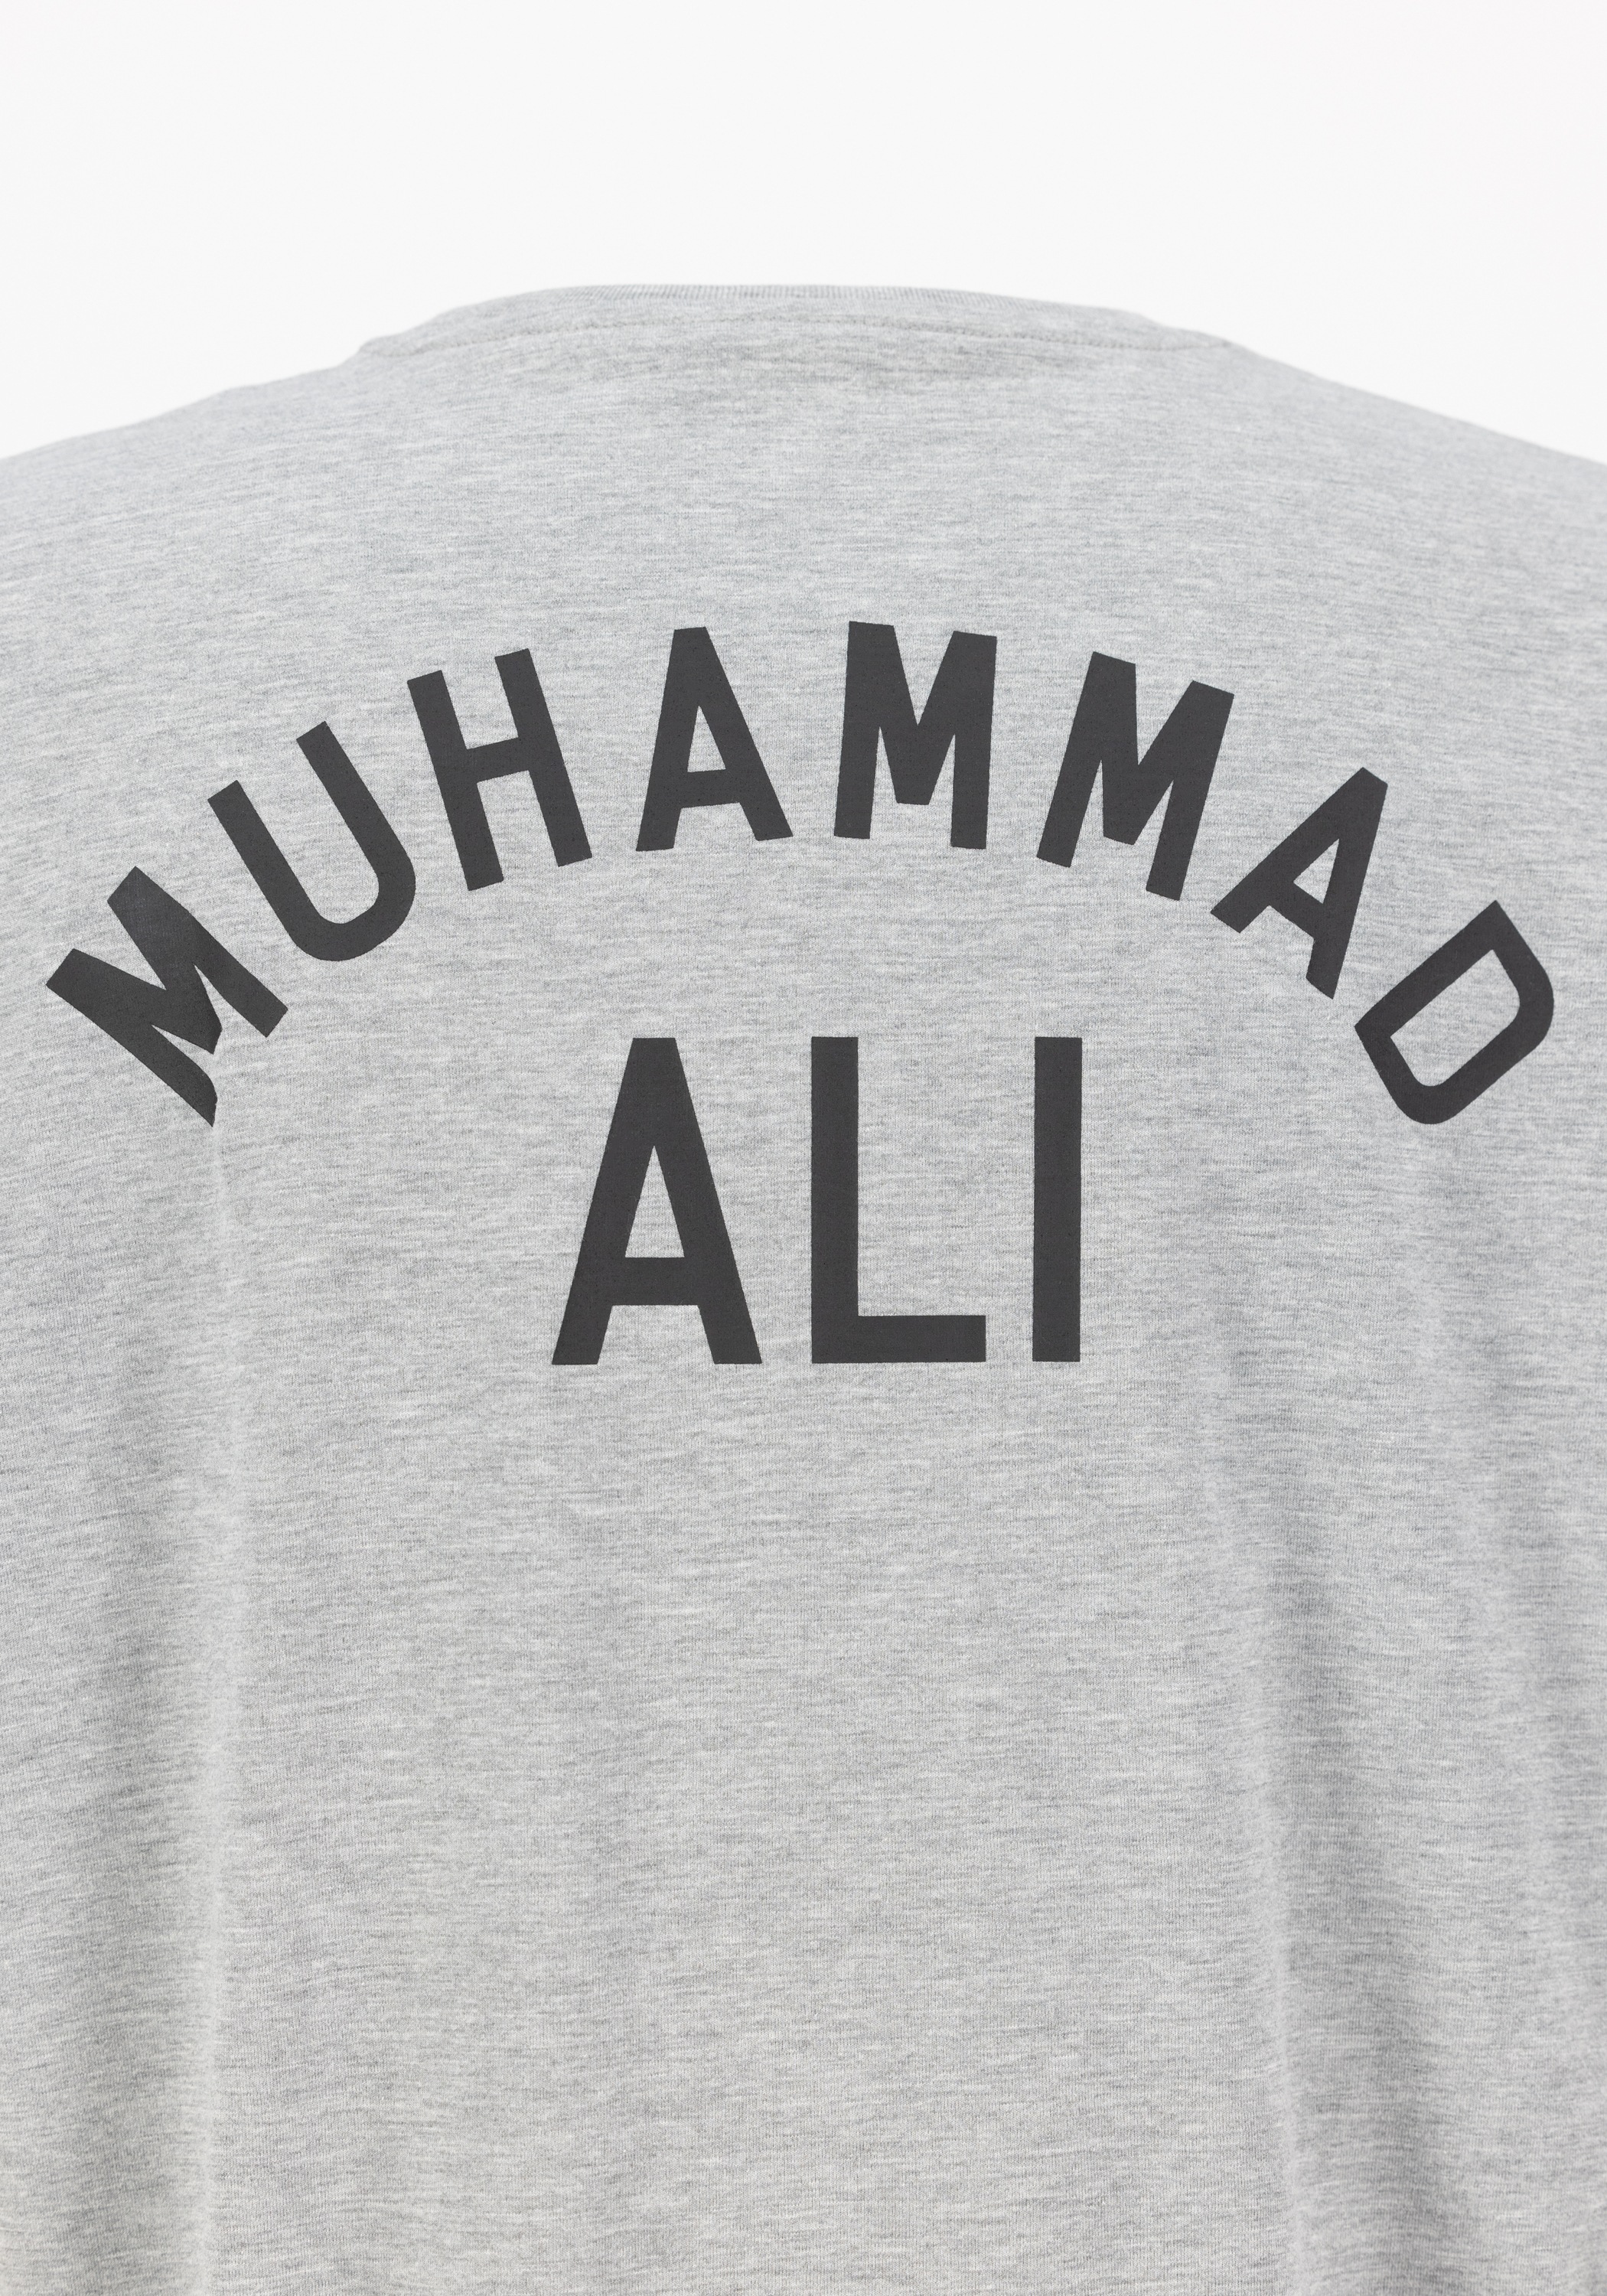 T-Shirt Ali Muhammad T« kaufen - Alpha »Alpha Industries T-Shirts online BP Industries Men